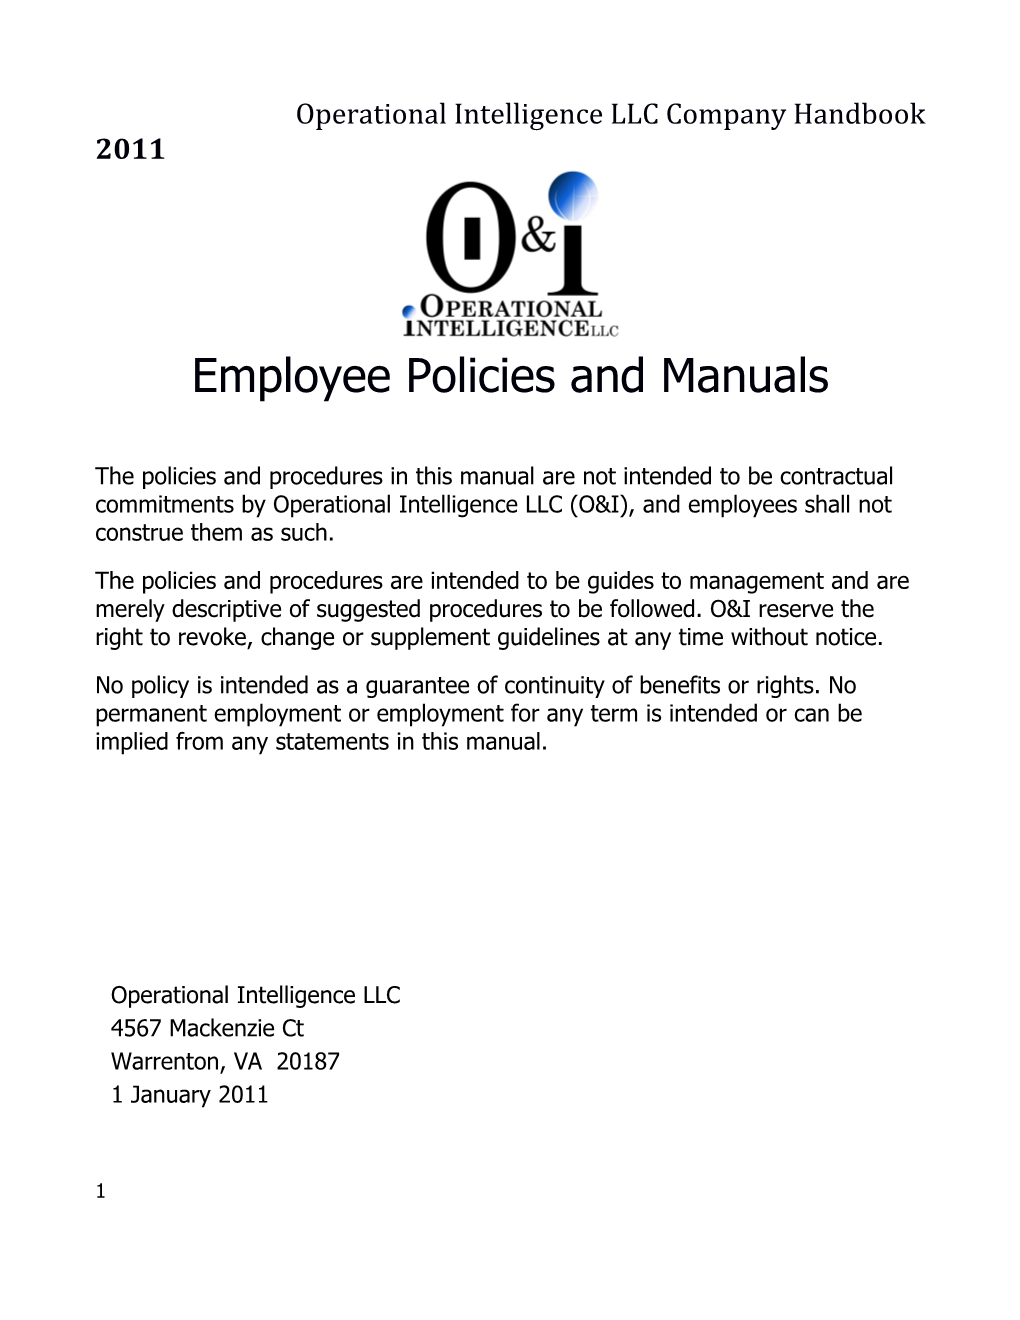 Operational Intelligence LLC Employee Manual